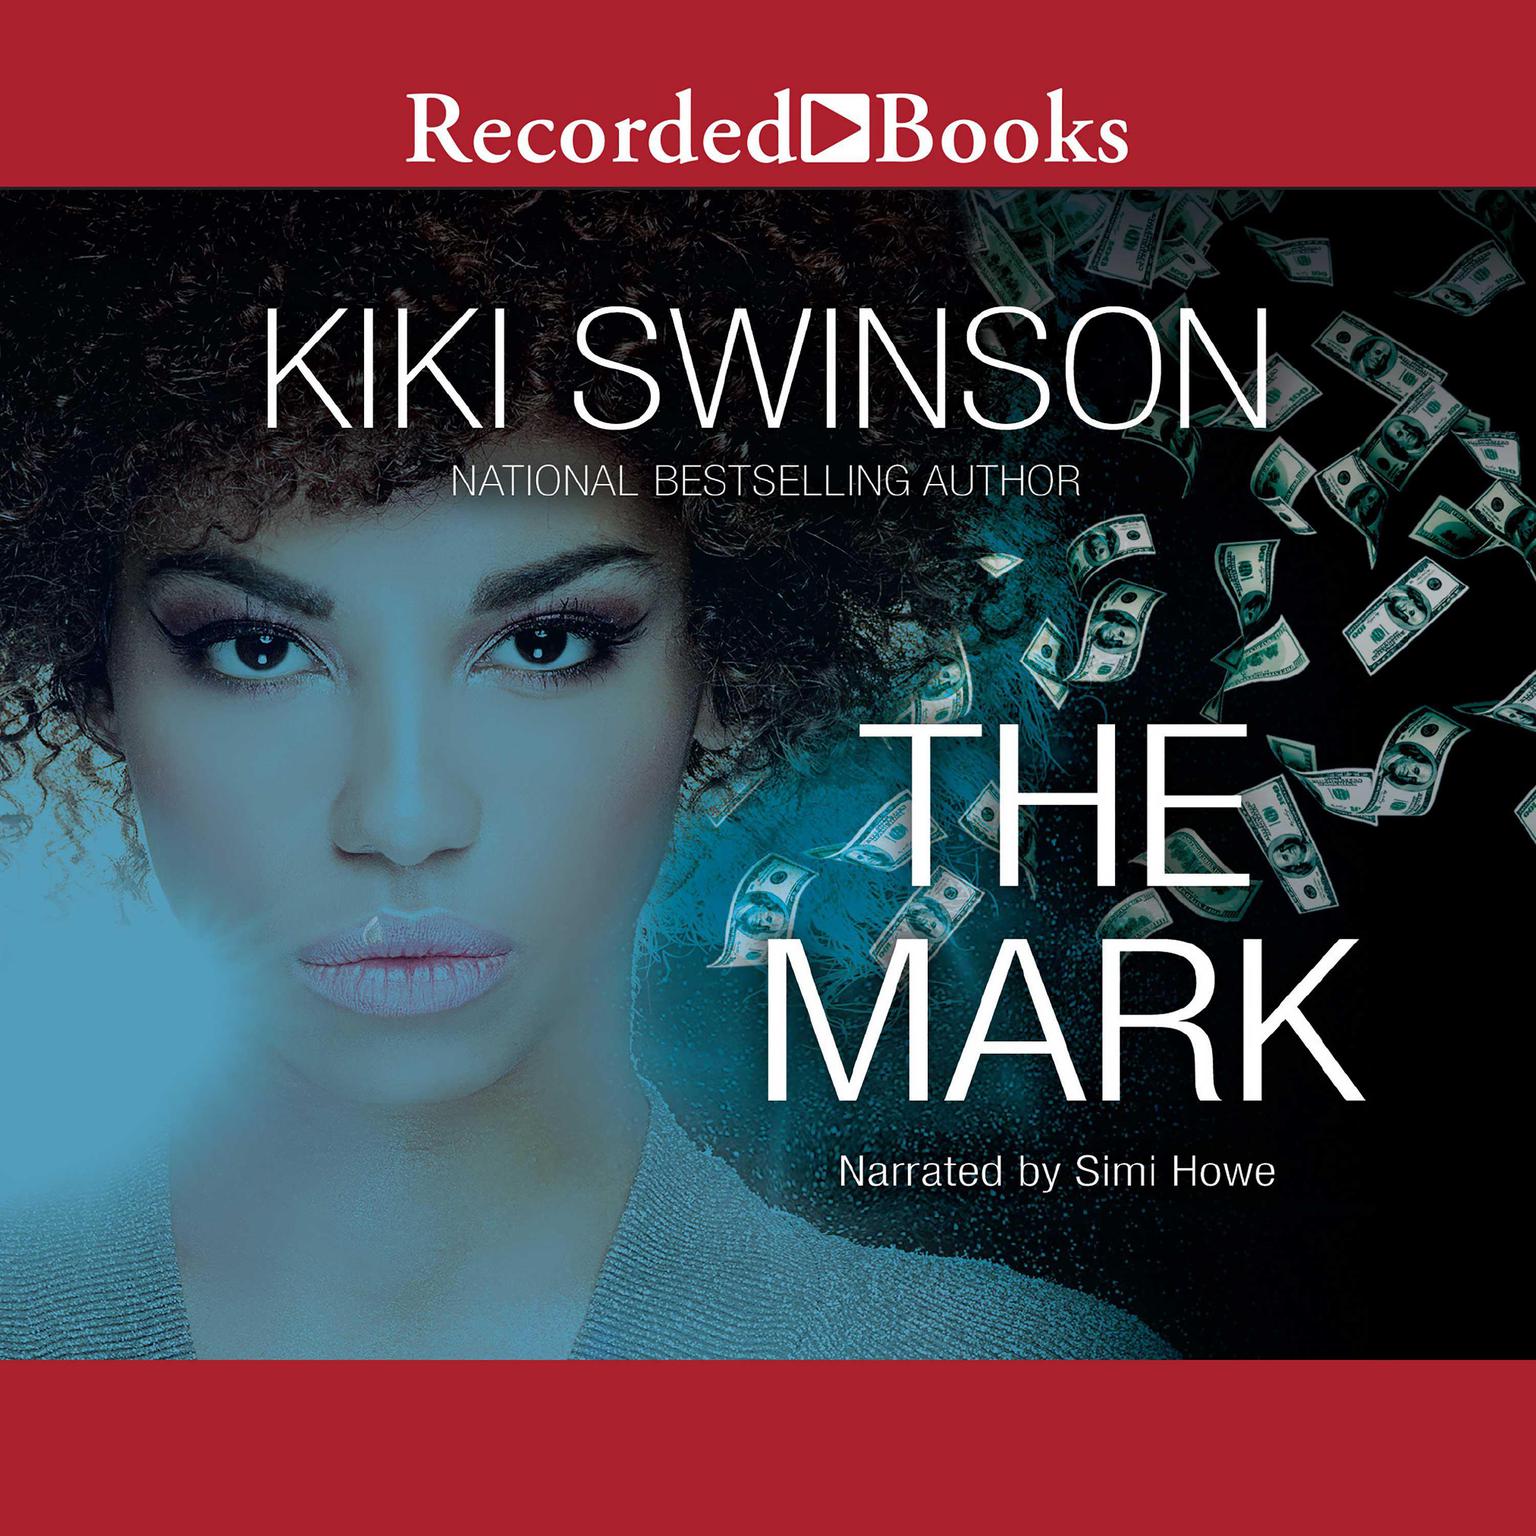 The Mark Audiobook, by Kiki Swinson